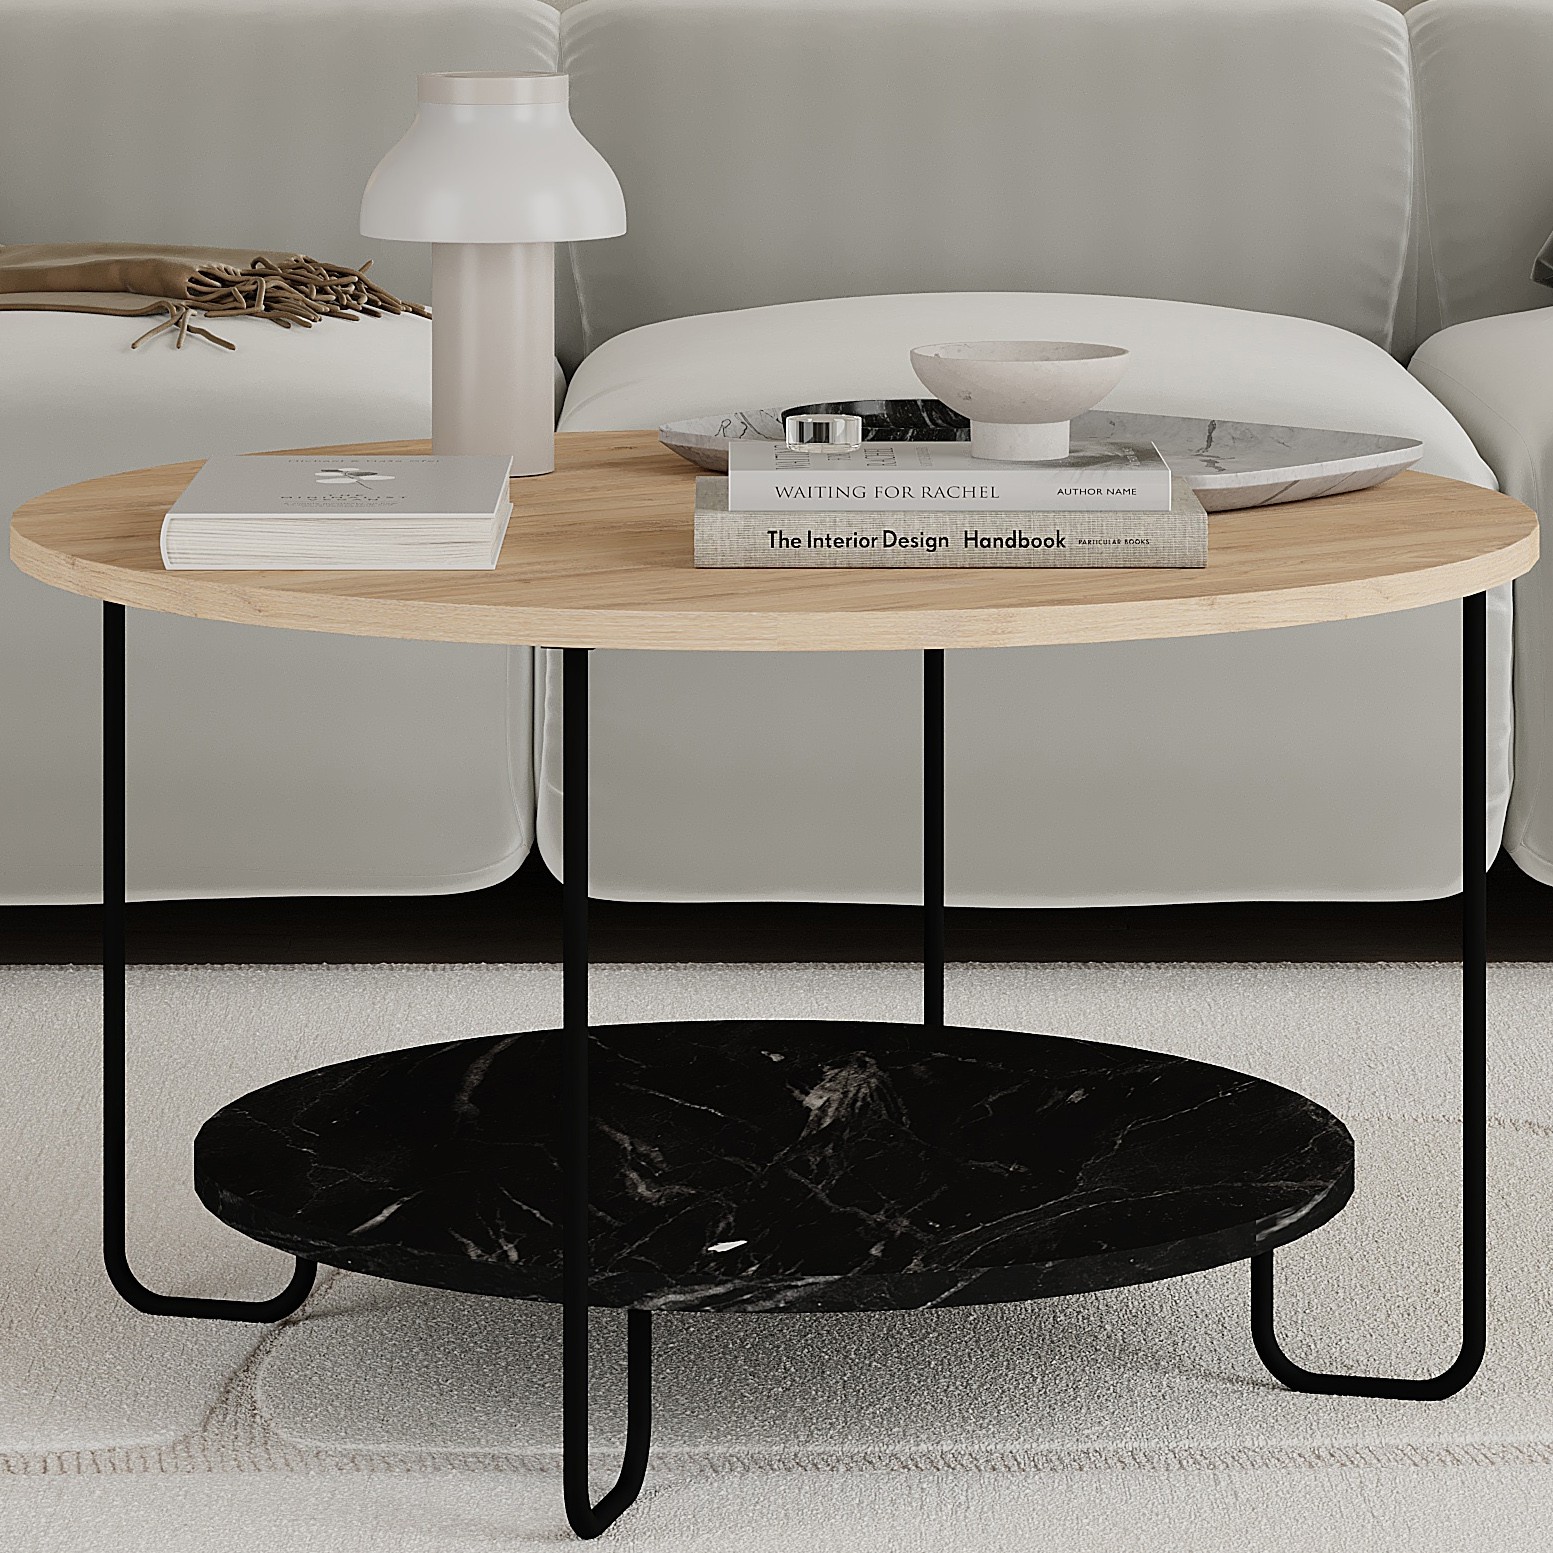 NORFOLK COFFEE TABLE - LIGHT MOCHA - M.SH.21331.4 - SHOWDEKO Quality  Furnitures & Projects